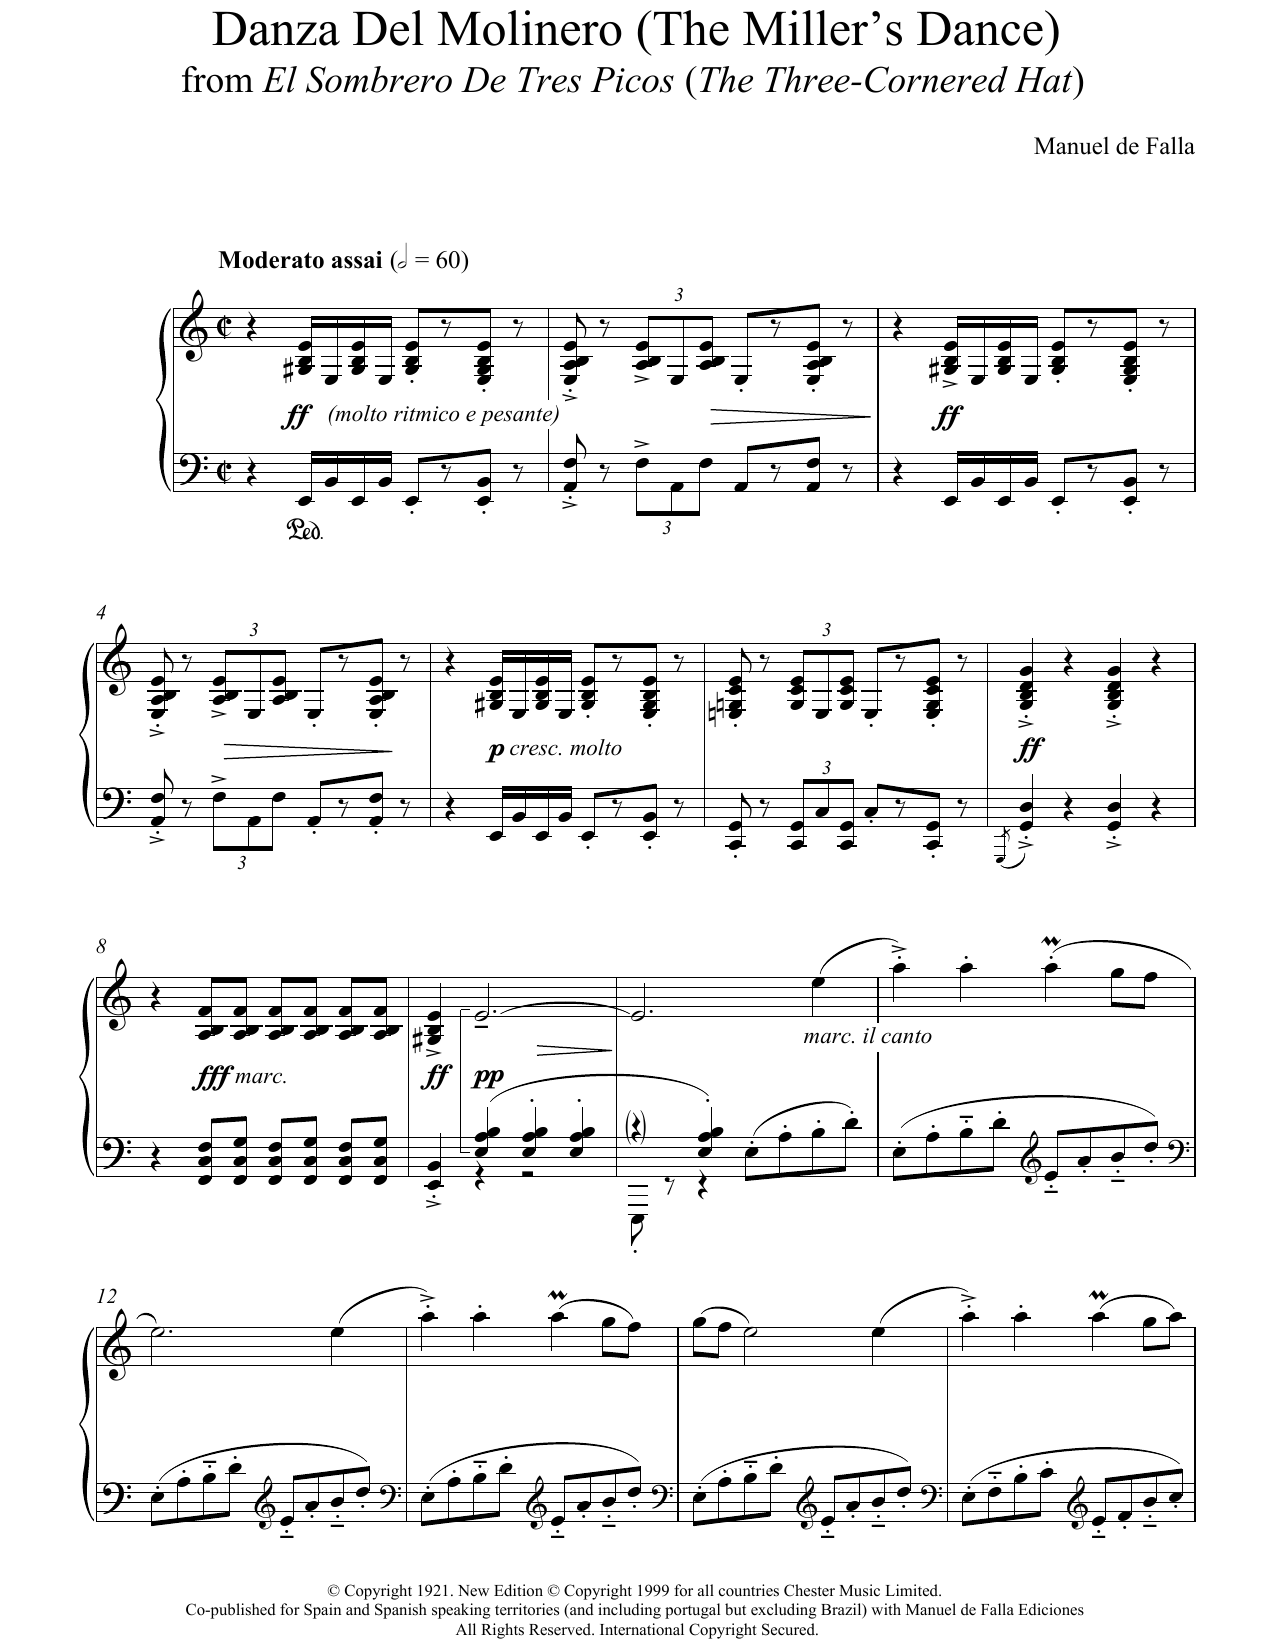 Manuel De Falla Danza Del Molinero (The Miller's Dance) (From El Sombrero De Tres Picos (The Three-Cornered Hat) Sheet Music Notes & Chords for Piano Solo - Download or Print PDF